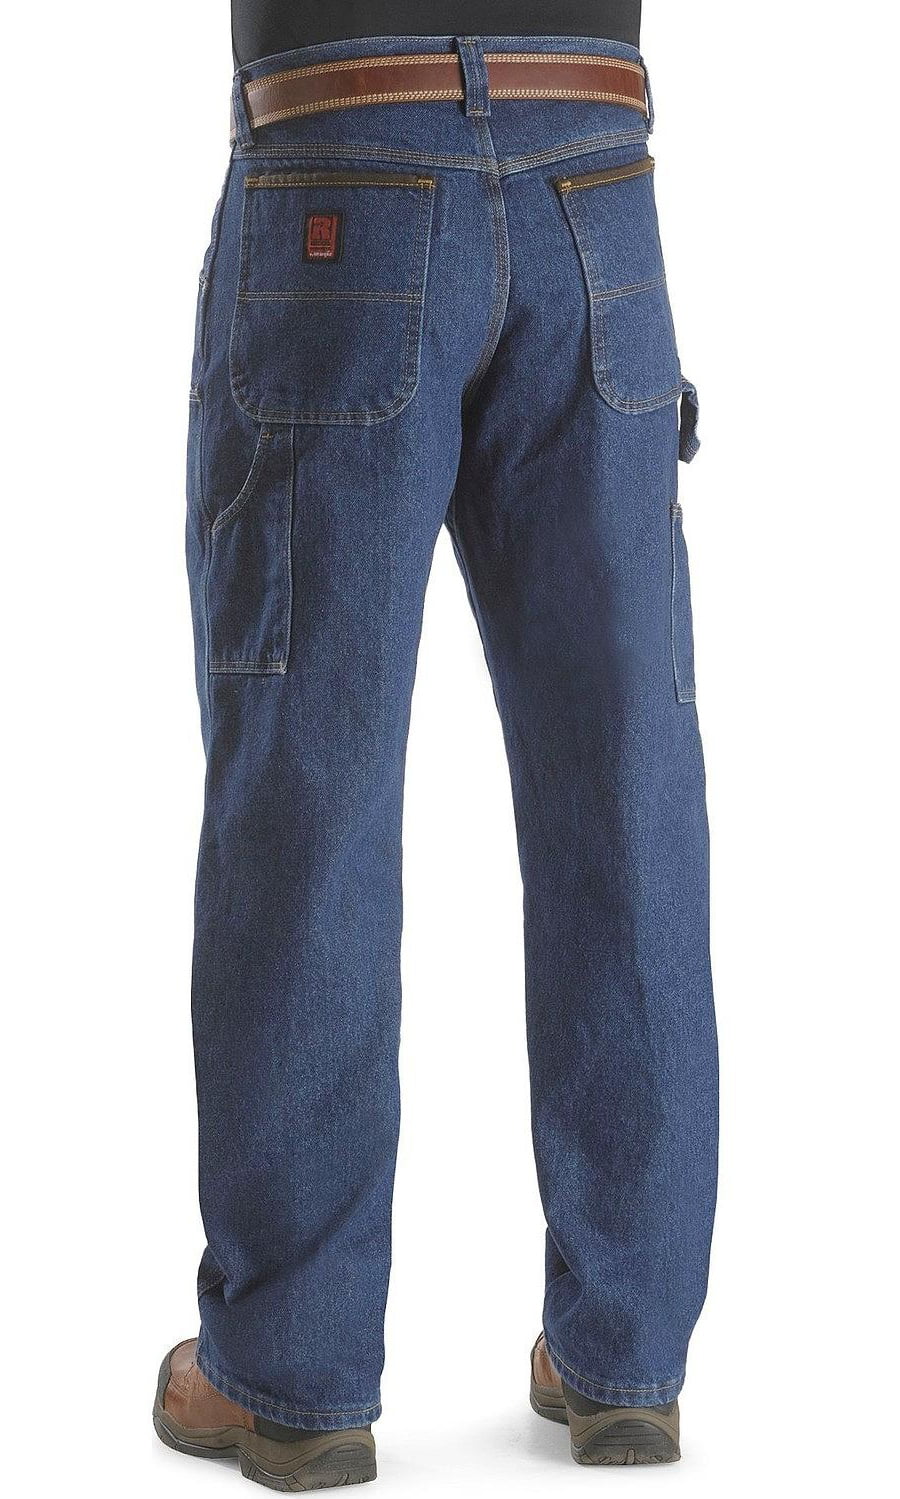 Wrangler Riggs Workwear Utility Jeans 